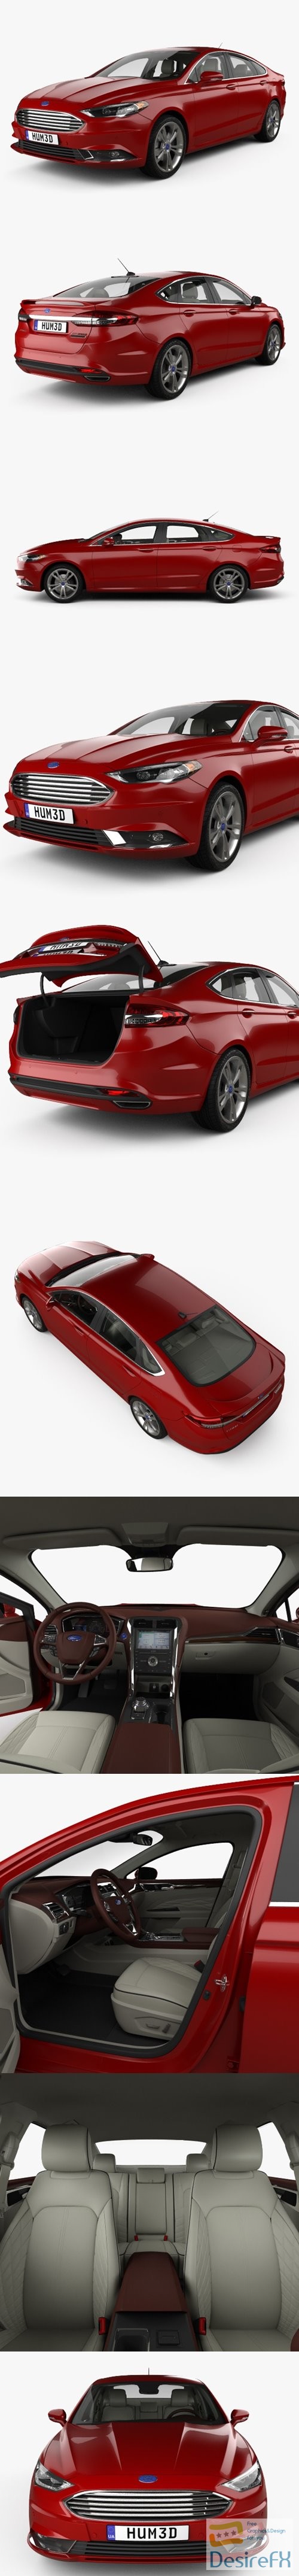 Ford Fusion Titanium with HQ interior 2017 3D Model